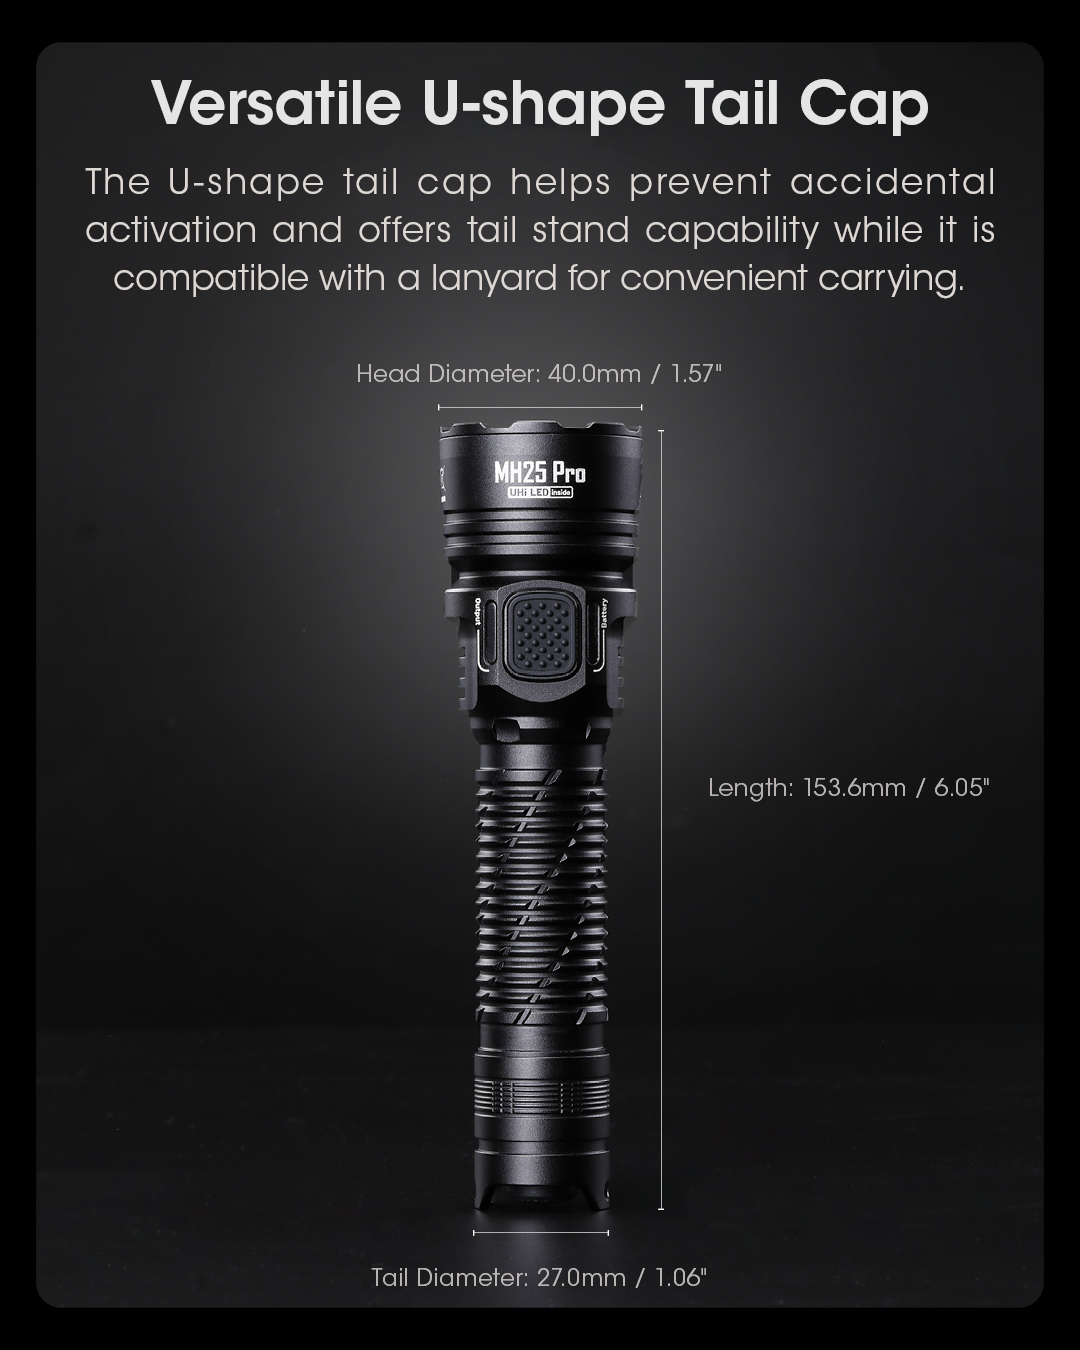 NITECORE-MH25-Pro-USB-C-Rechargeable-Flashlight-705-Meter-Long-Range-Search-Torc